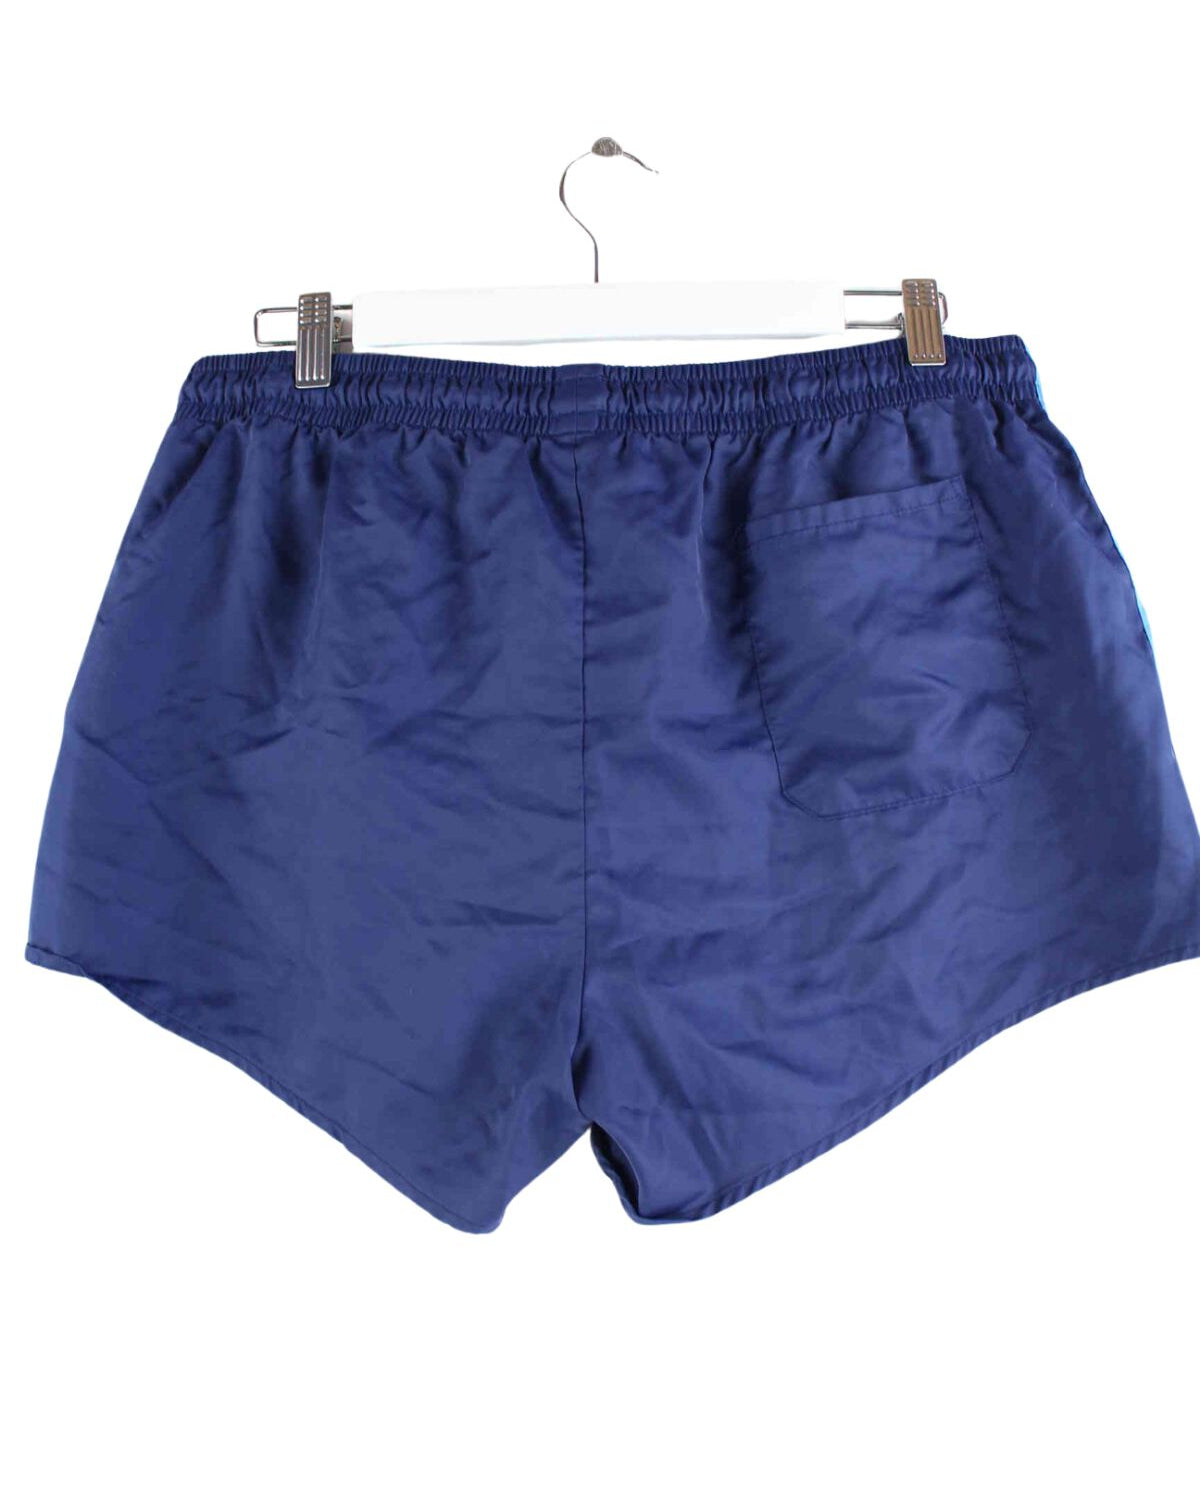 Adidas Damen 80s Vintage Shorts Blau M (back image)